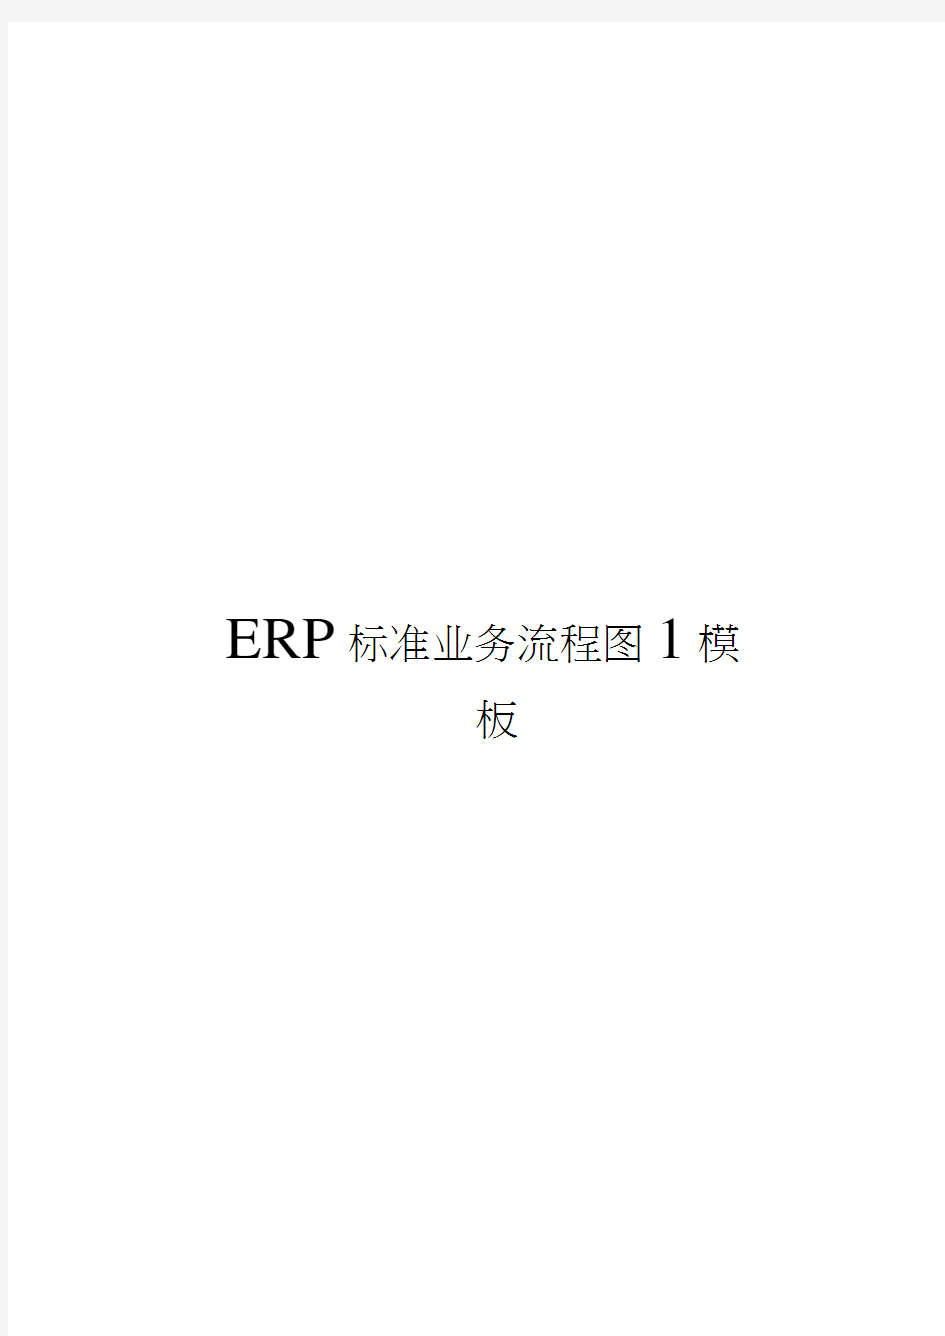 ERP标准业务流程图1模板